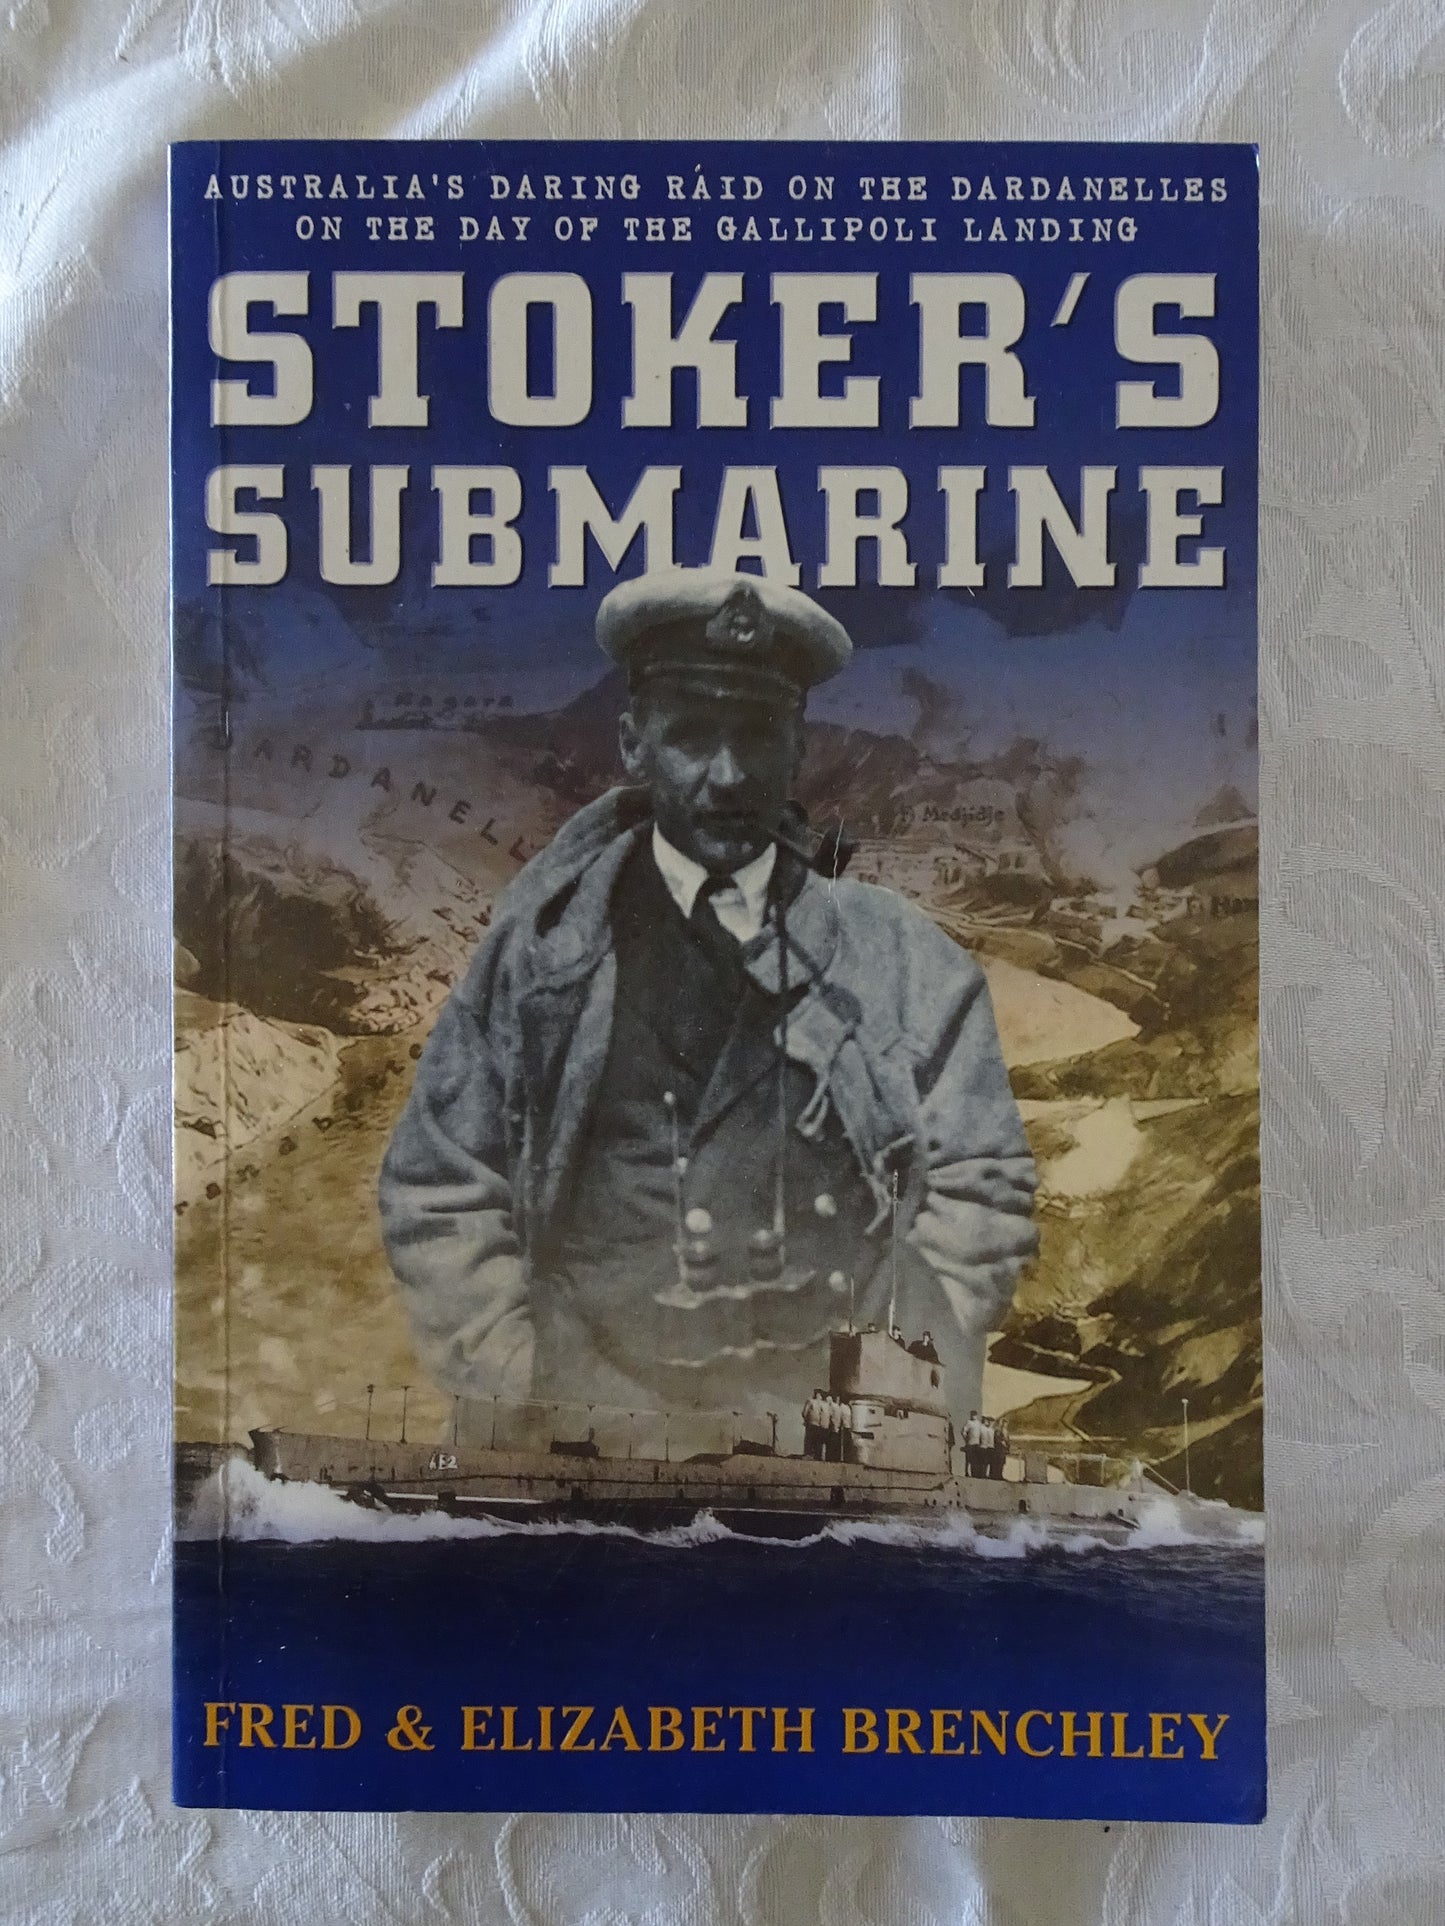 Stoker's Submarine by Fred & Elizabeth Brenchley